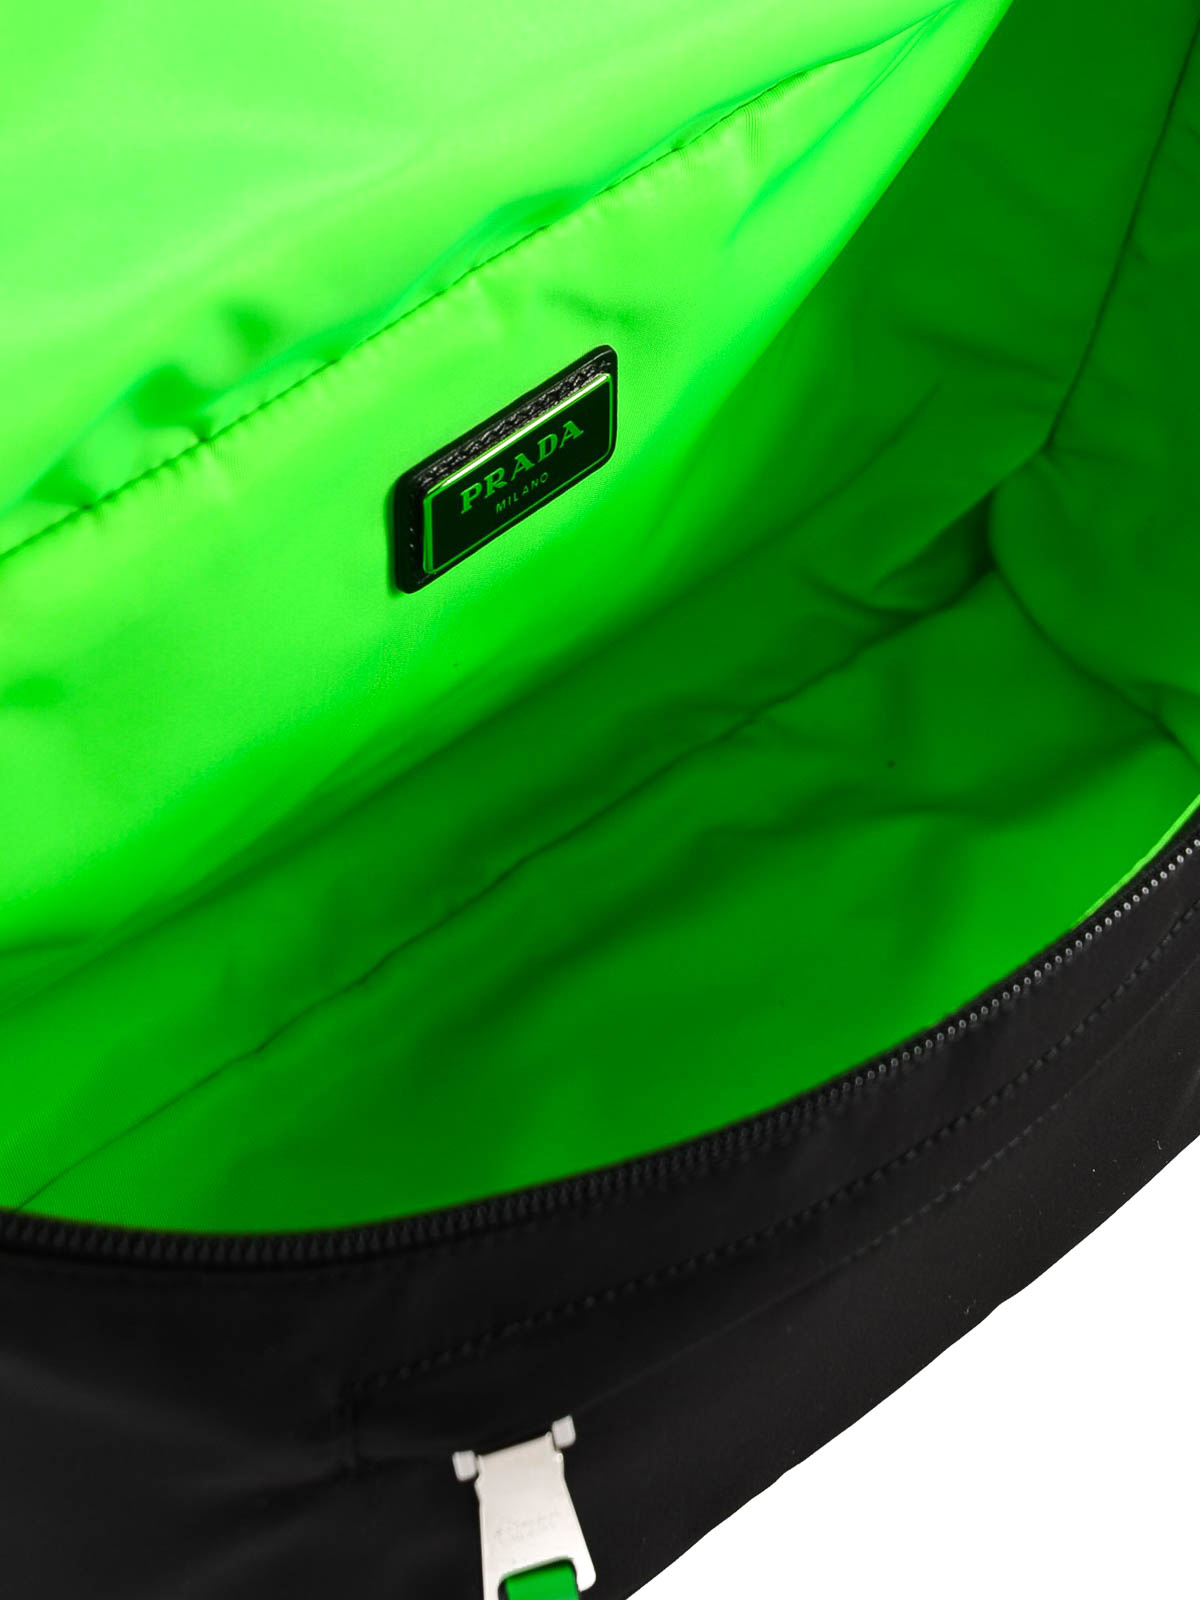 Prada Lime Green Nylon Shoulder Bag